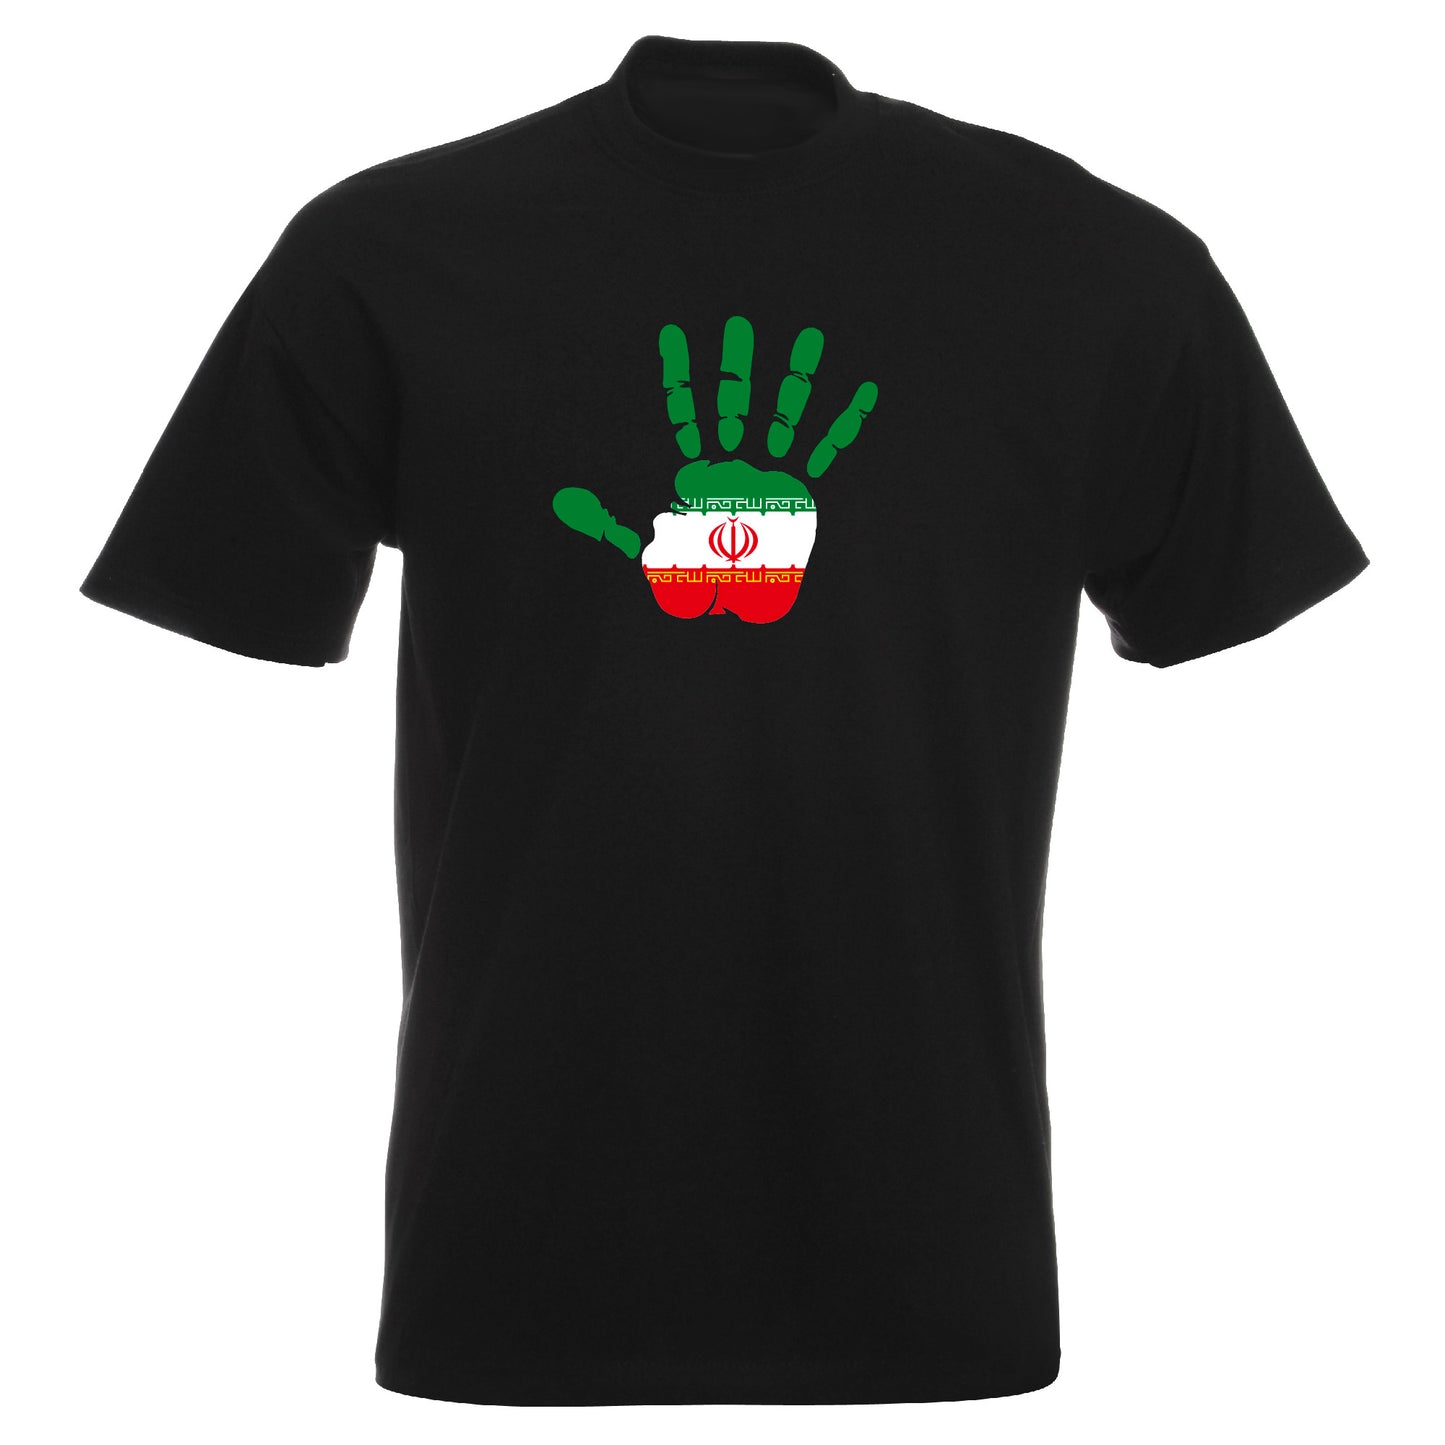 INDIGOS UG - T-Shirt Herren - Iran - Hand - Fussball